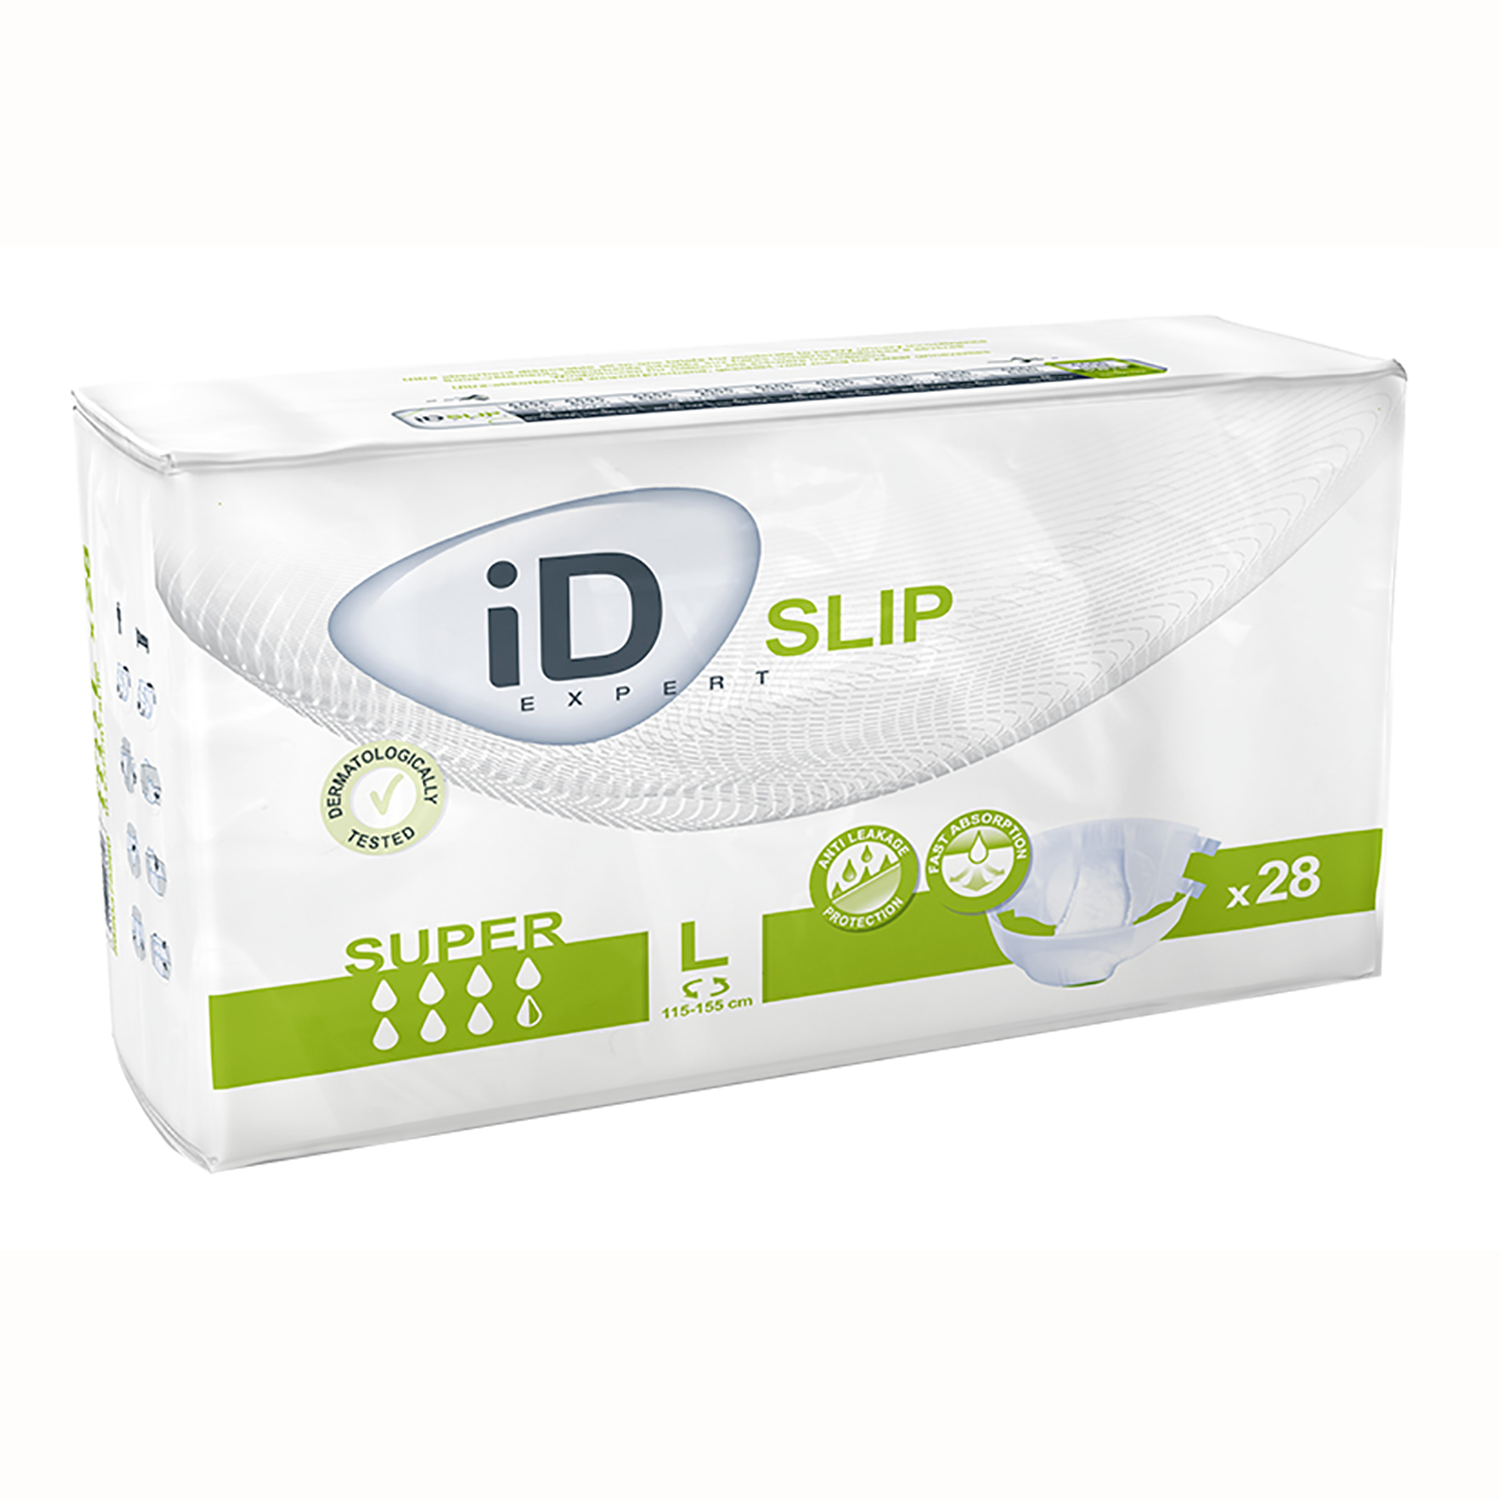 iD Expert Slip PE Super Large | Pack of 28 (1)